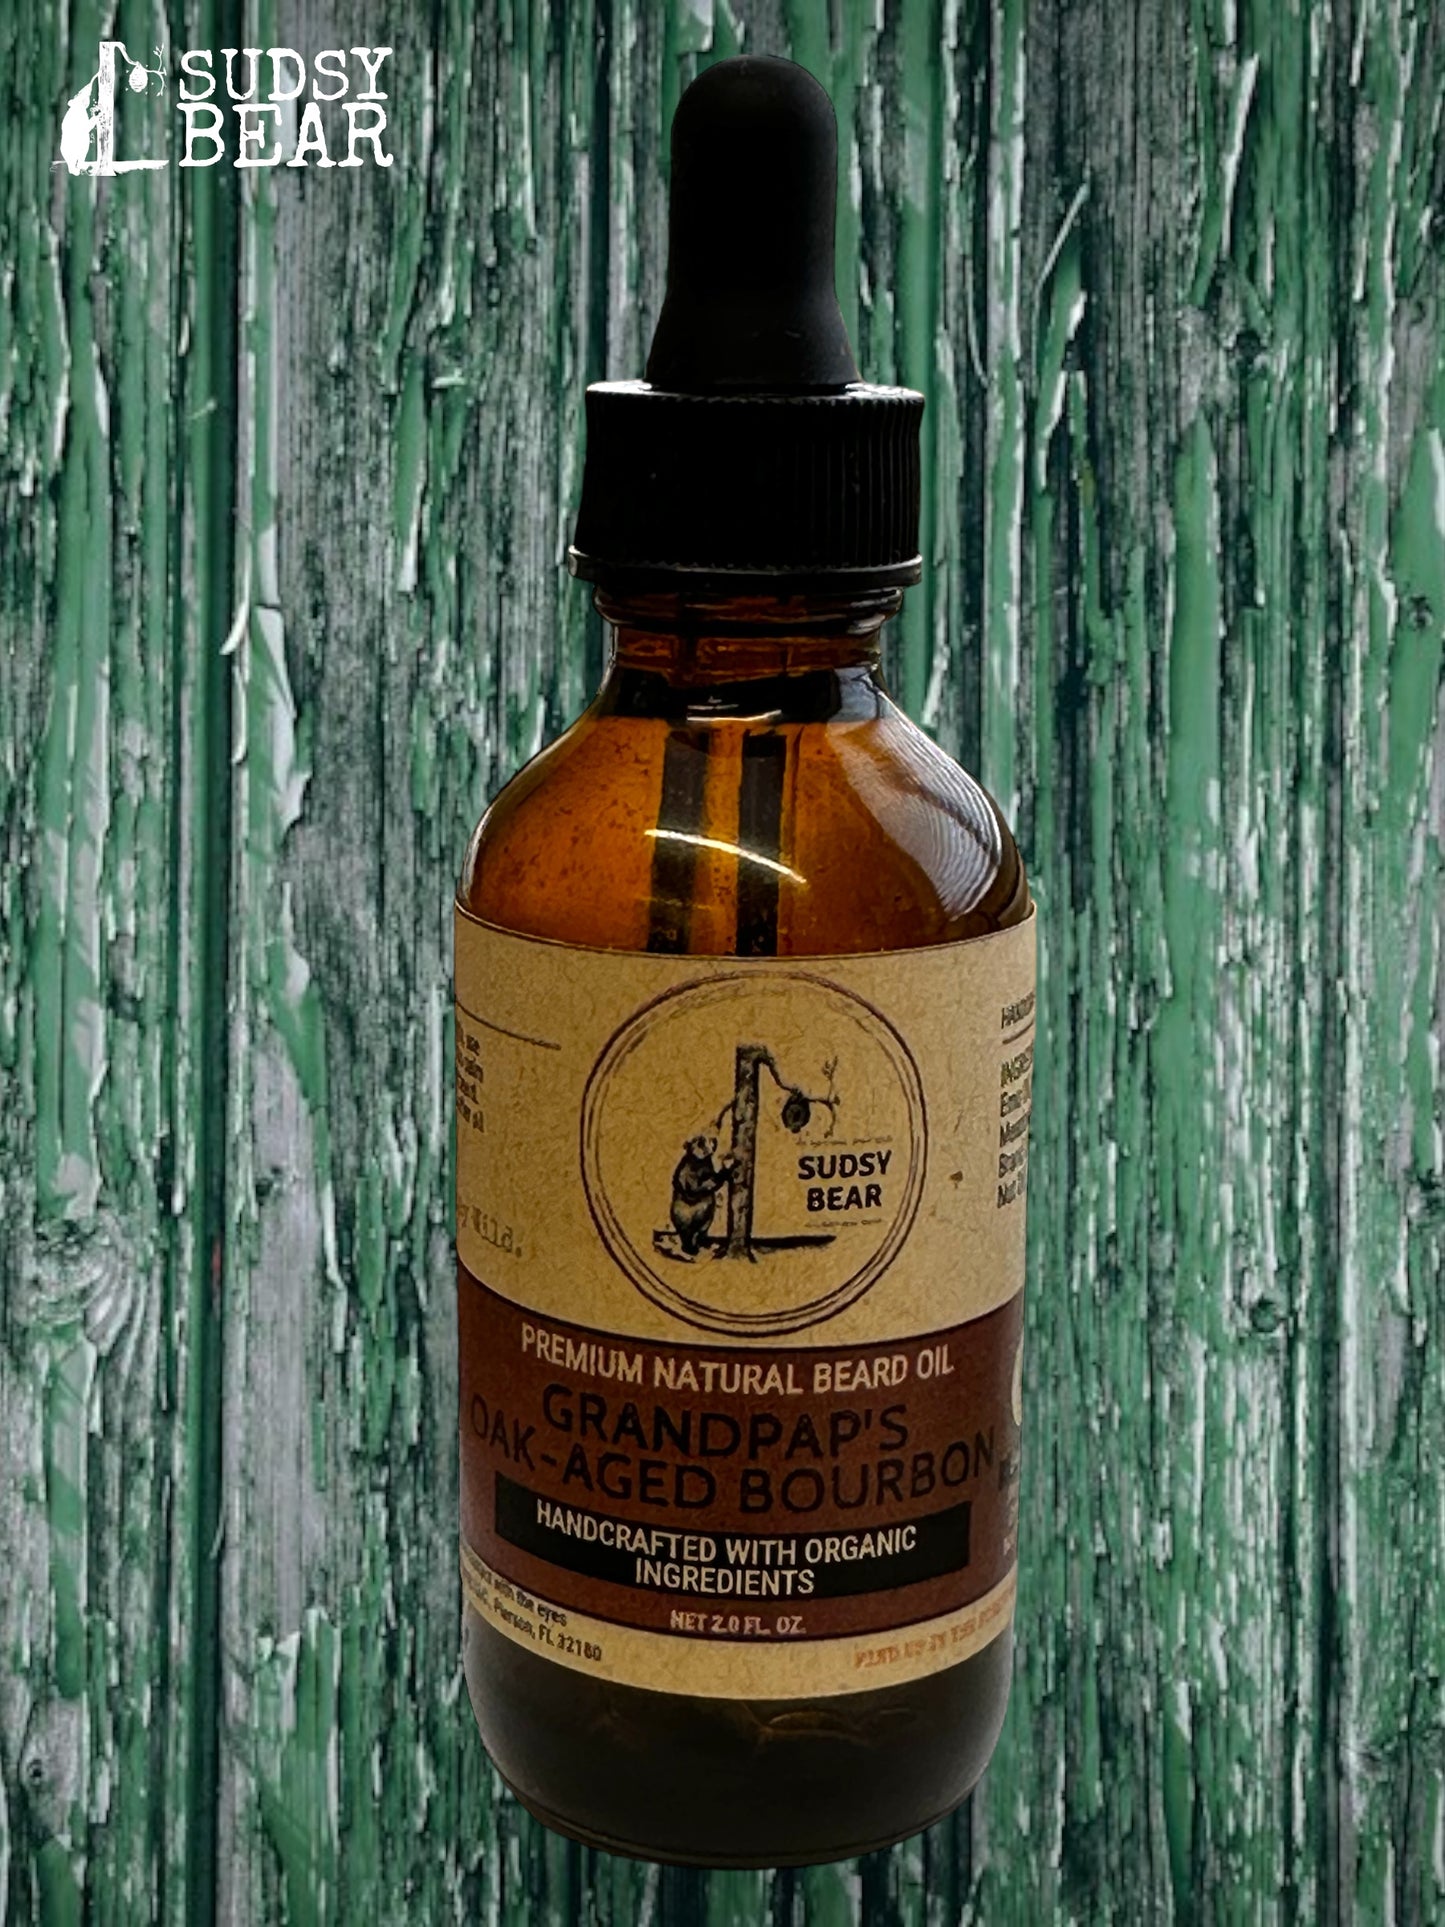 
                  
                    Grandpap's Oak-Aged Bourbon Beard Oil
                  
                